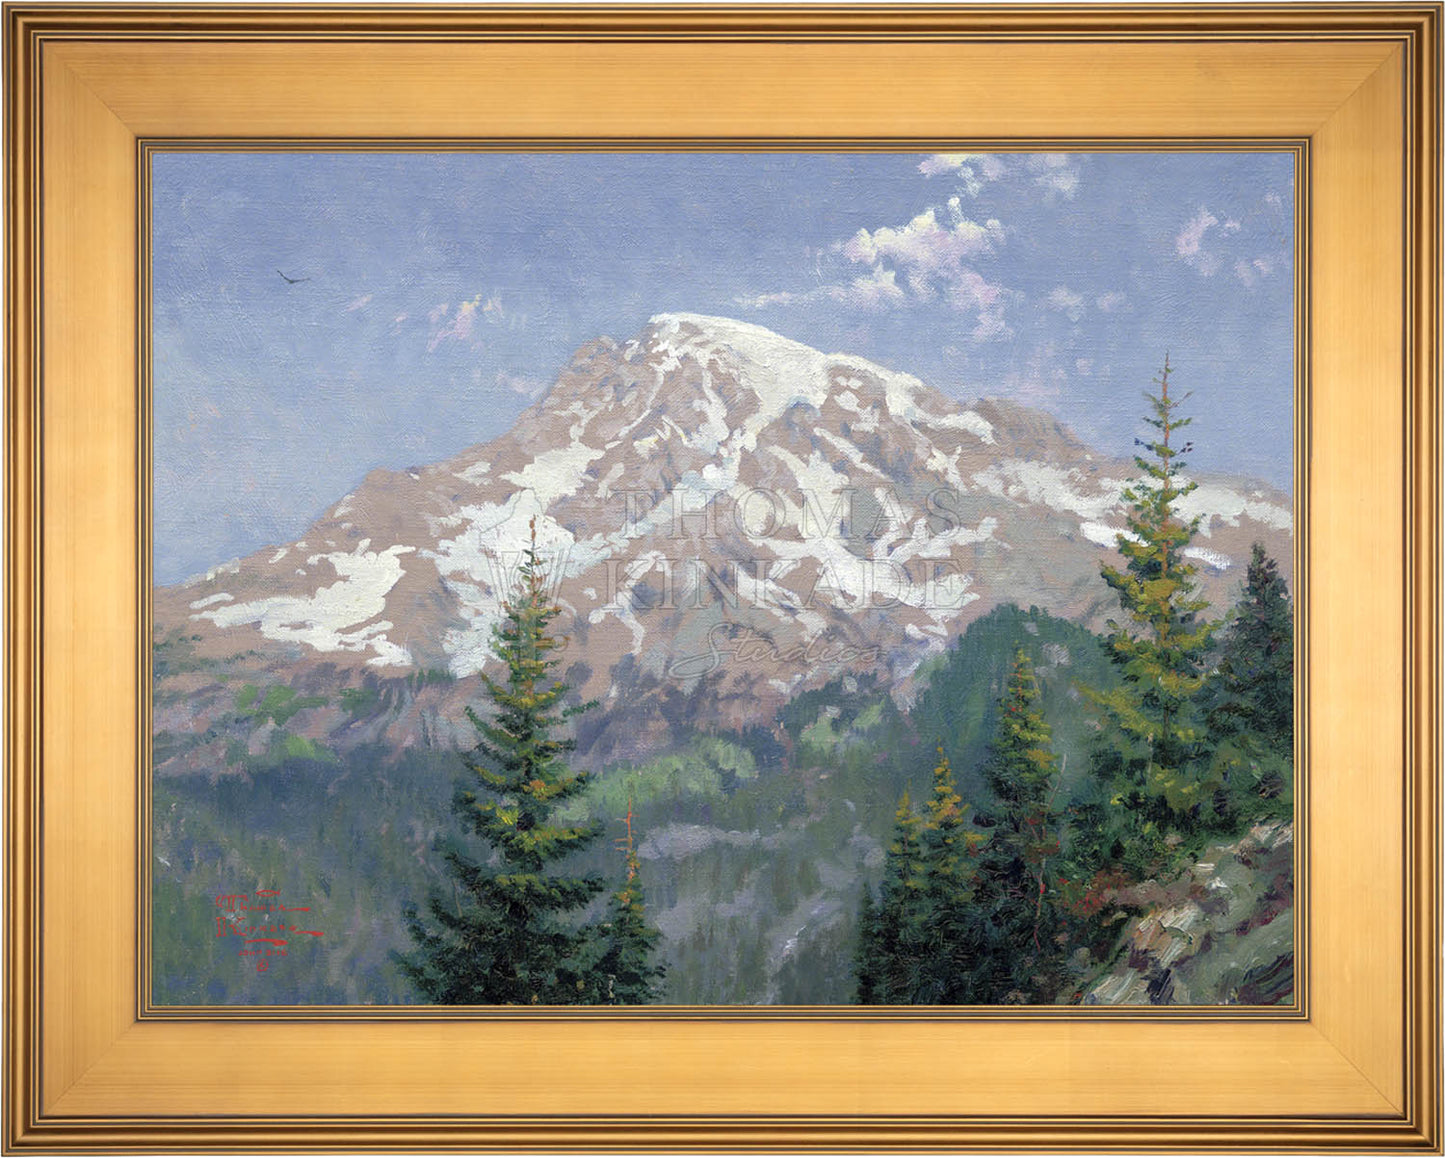 Blue Mount Rainier Tote Bag, Seattle Themed Premium Art Washable Resua –  alicechanart